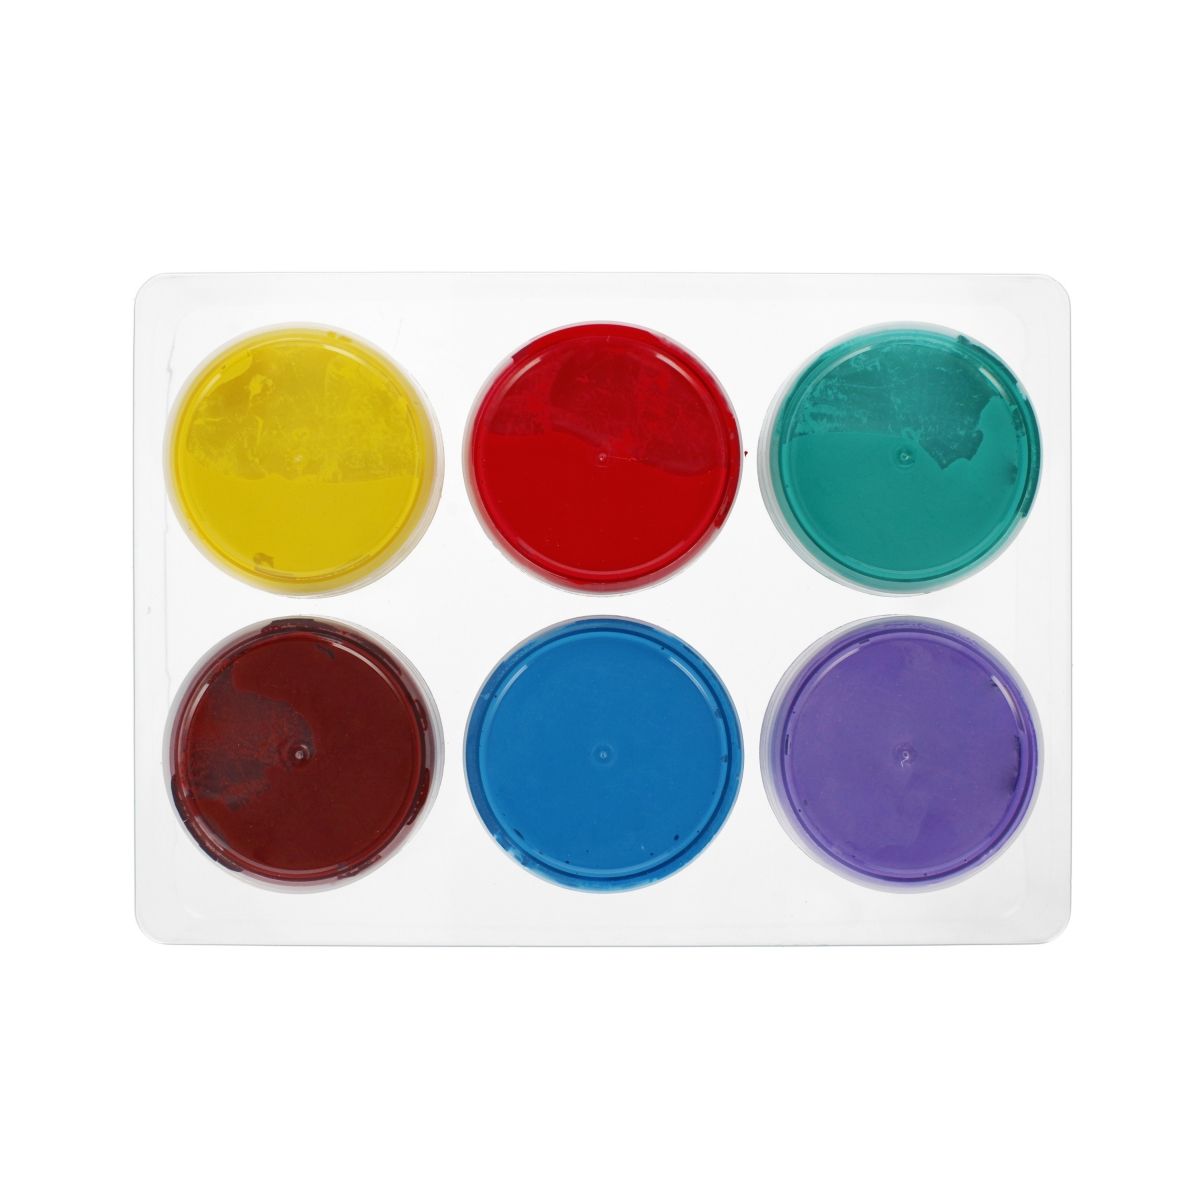 Farba do malowania palcami Starpak Paw Patrol 40ml 6 kolor. (495356)